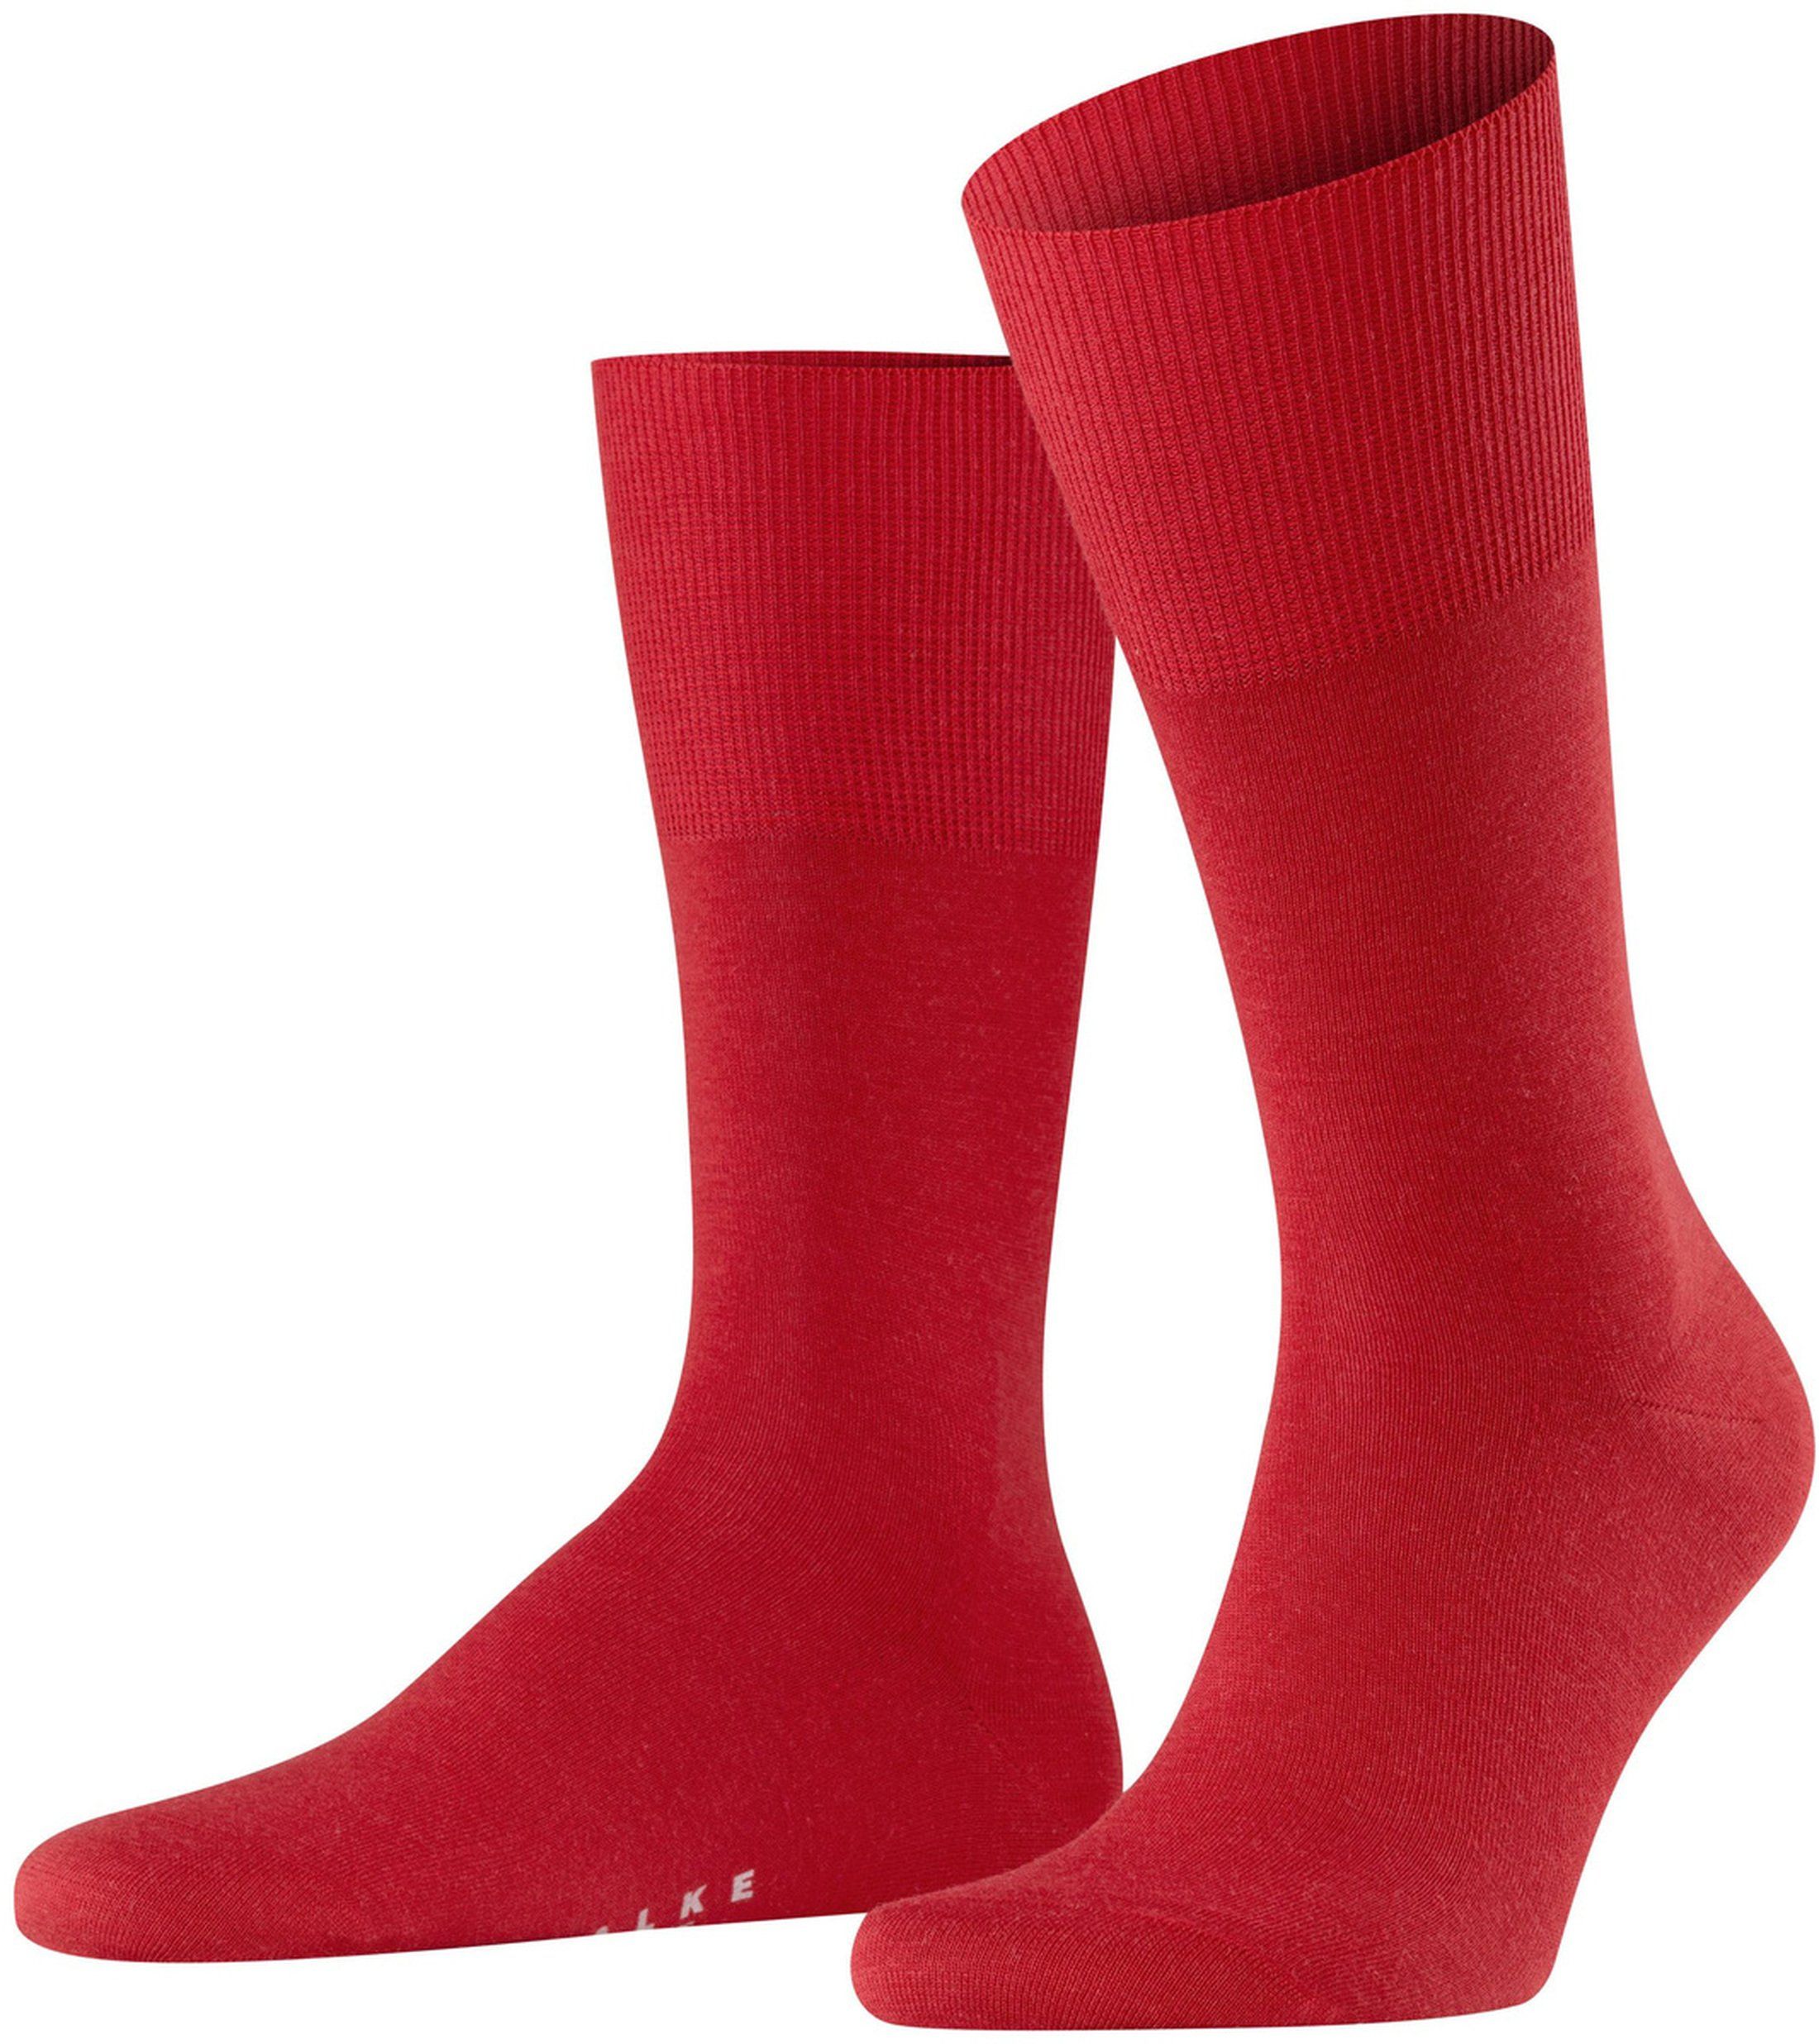 Falke Airport Socks 8120 Red size 39-40